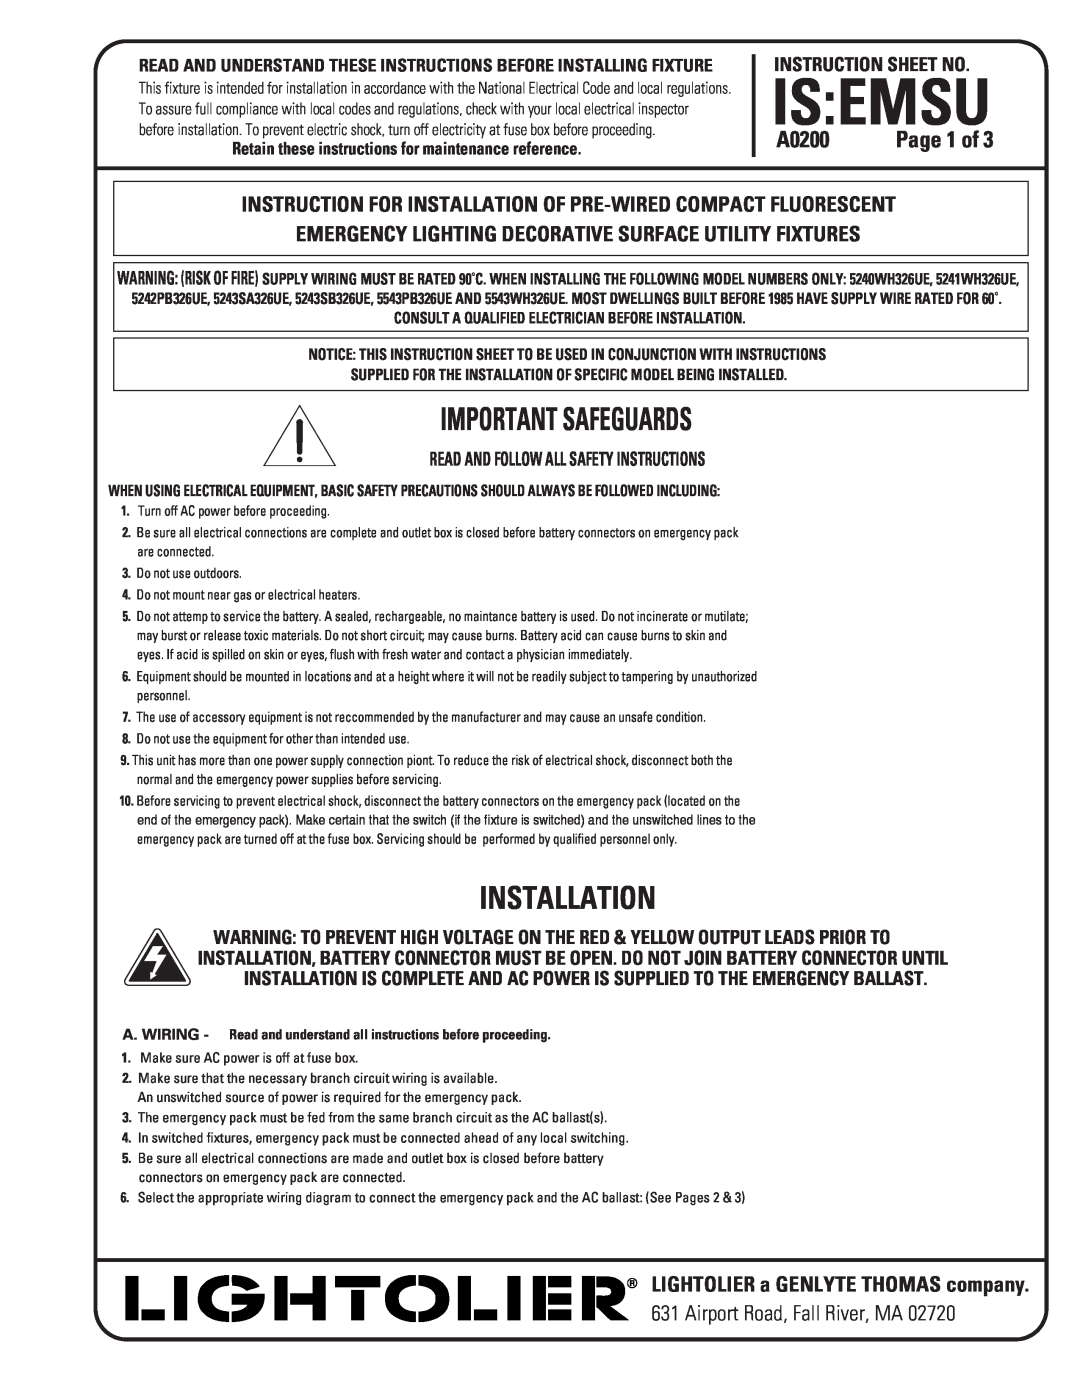 Lightolier A0200 instruction sheet Is Emsu, Important Safeguards, Installation 